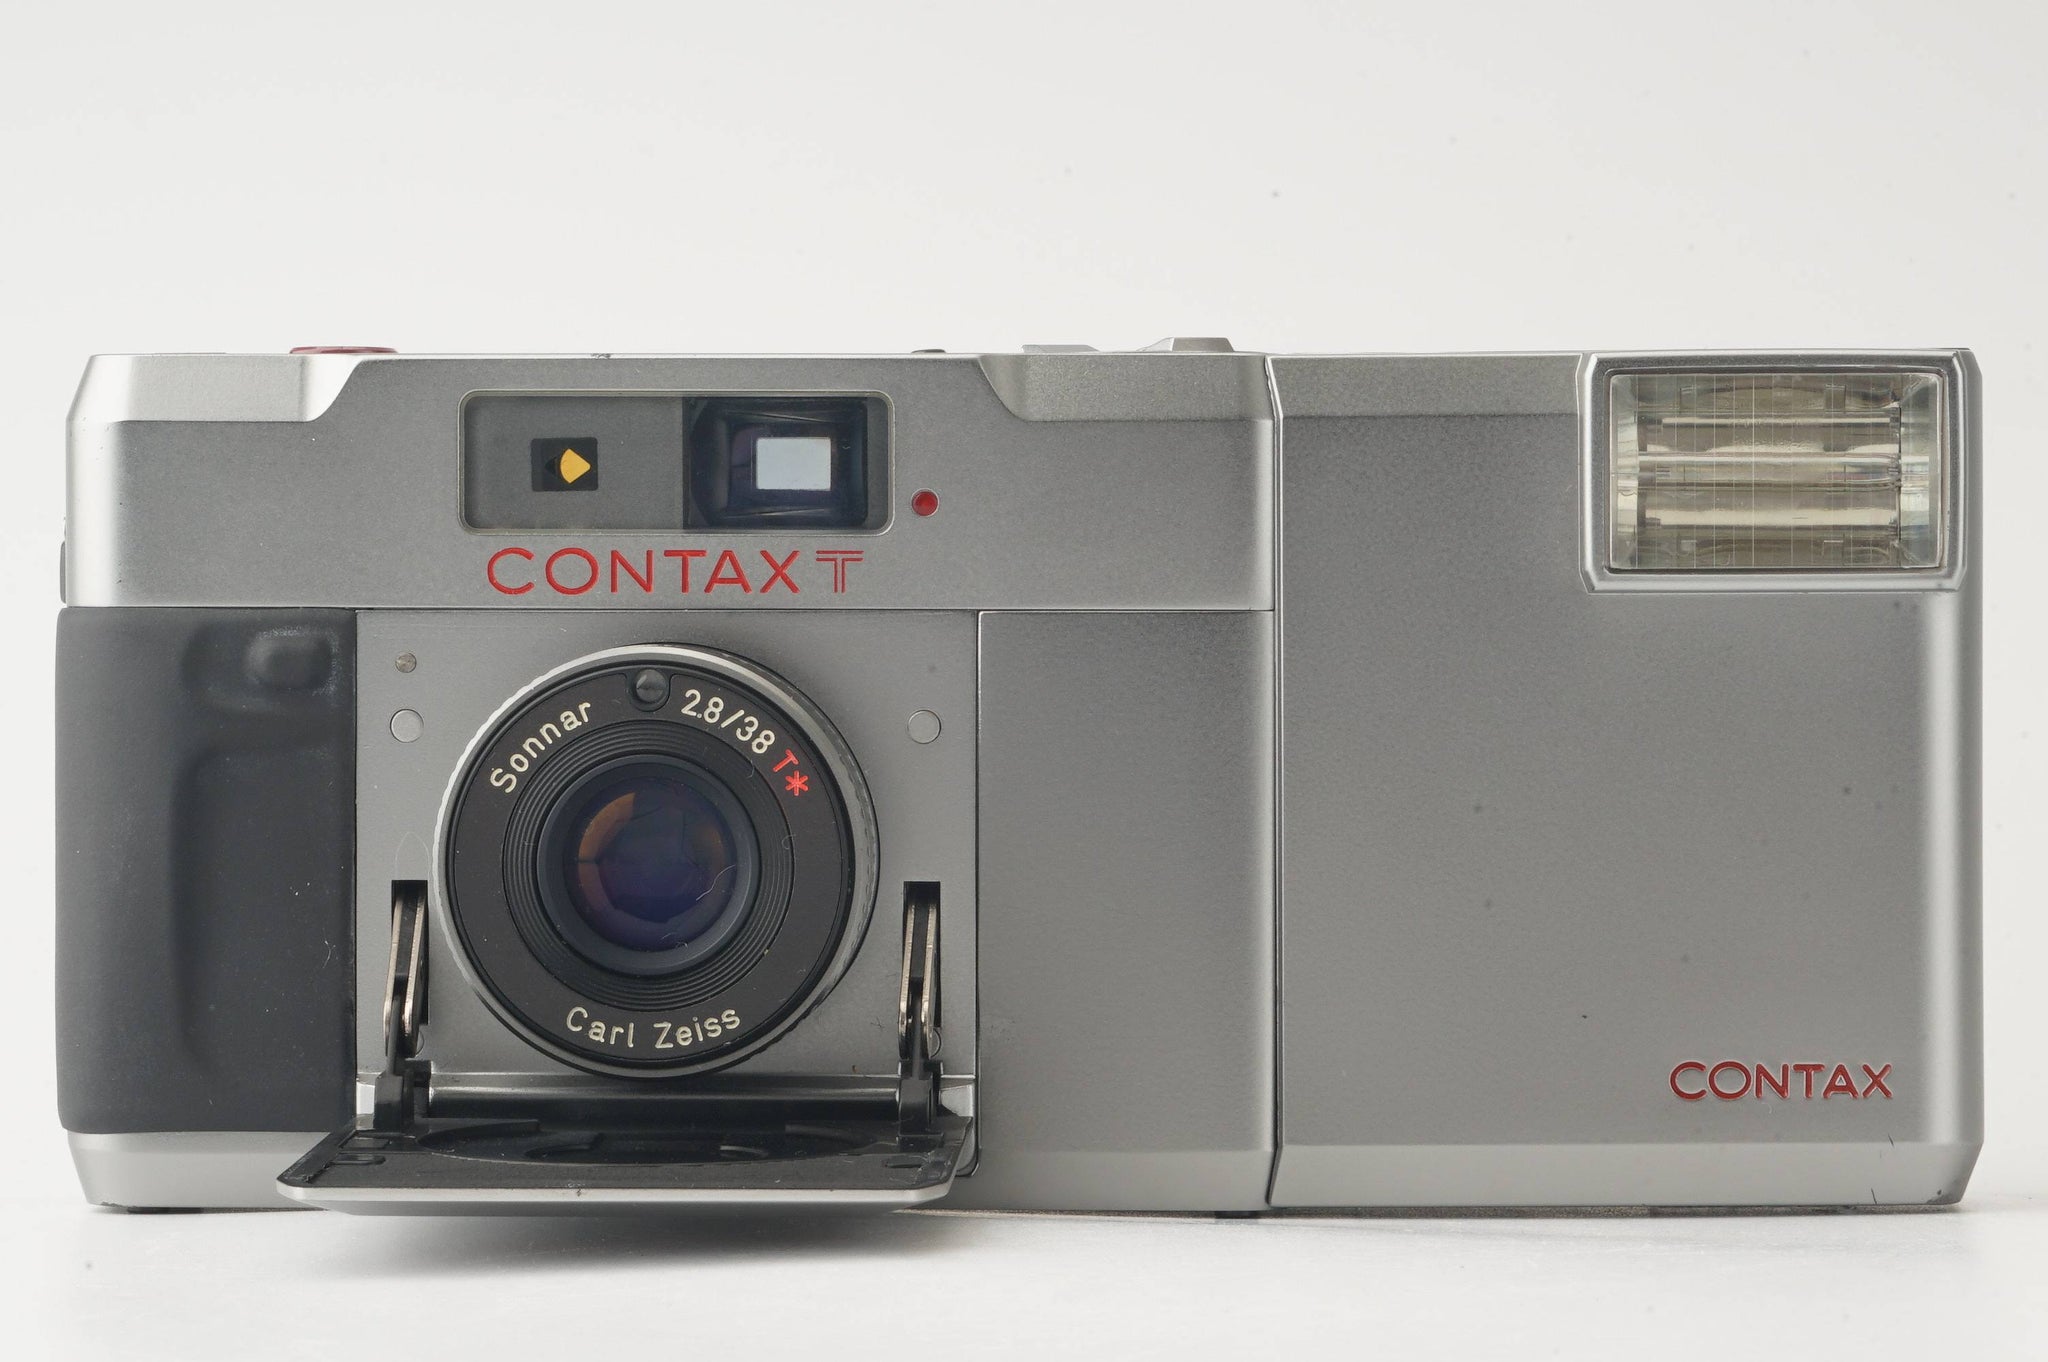 CONTAX T 初代 コンパクト フィルムカメラ - フィルムカメラ